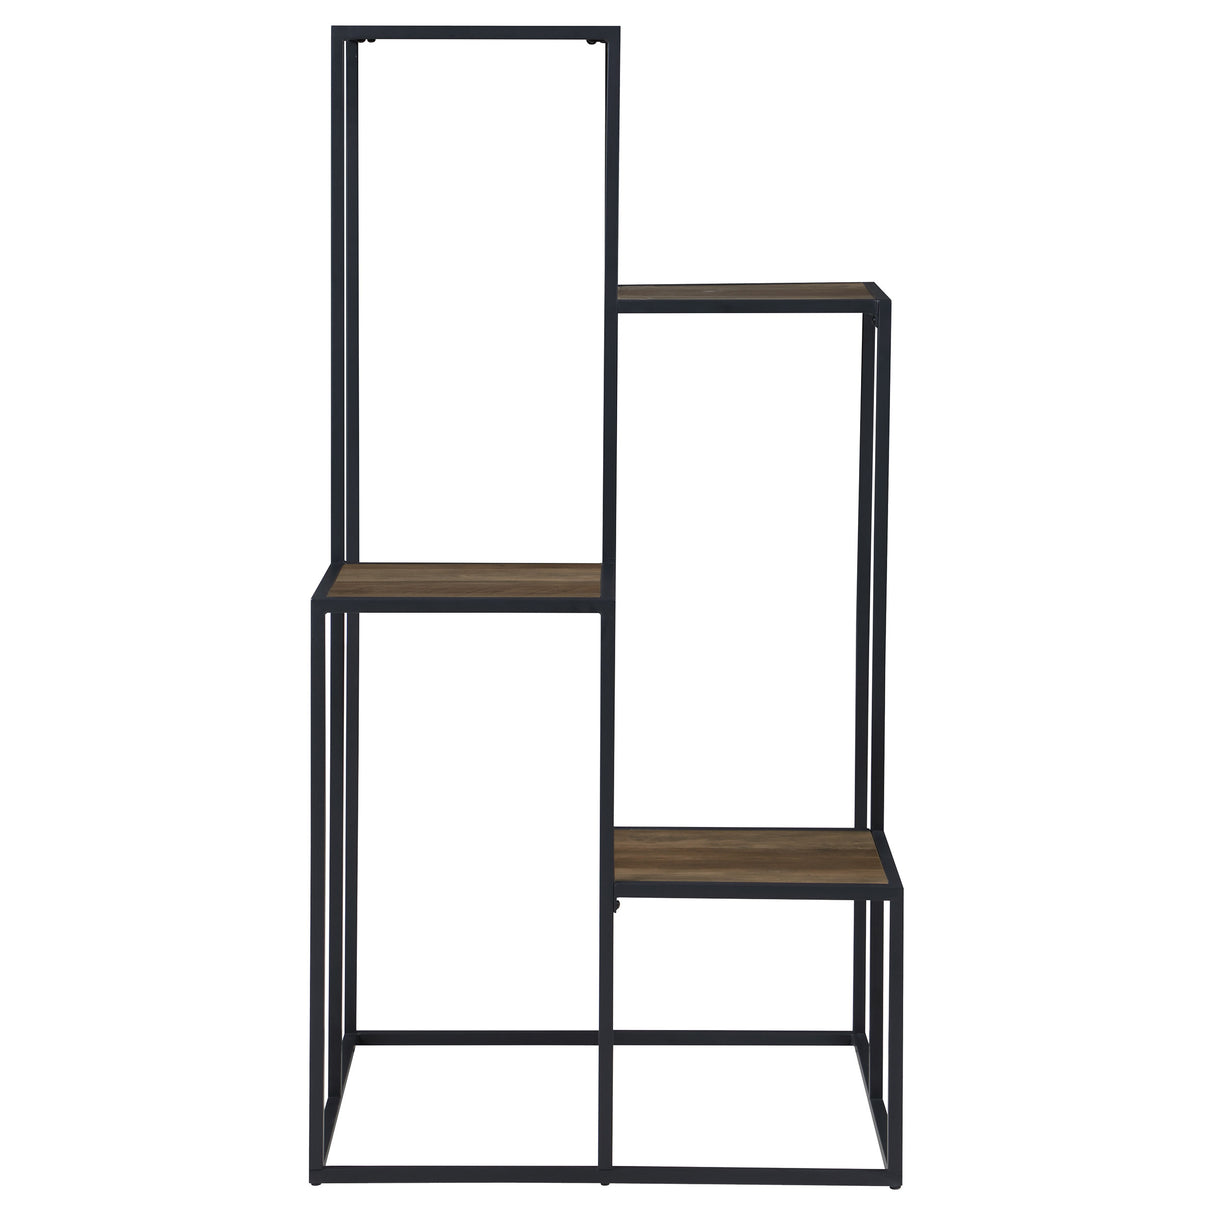 Display Shelf - Rito 4-tier Display Shelf Rustic Brown and Black